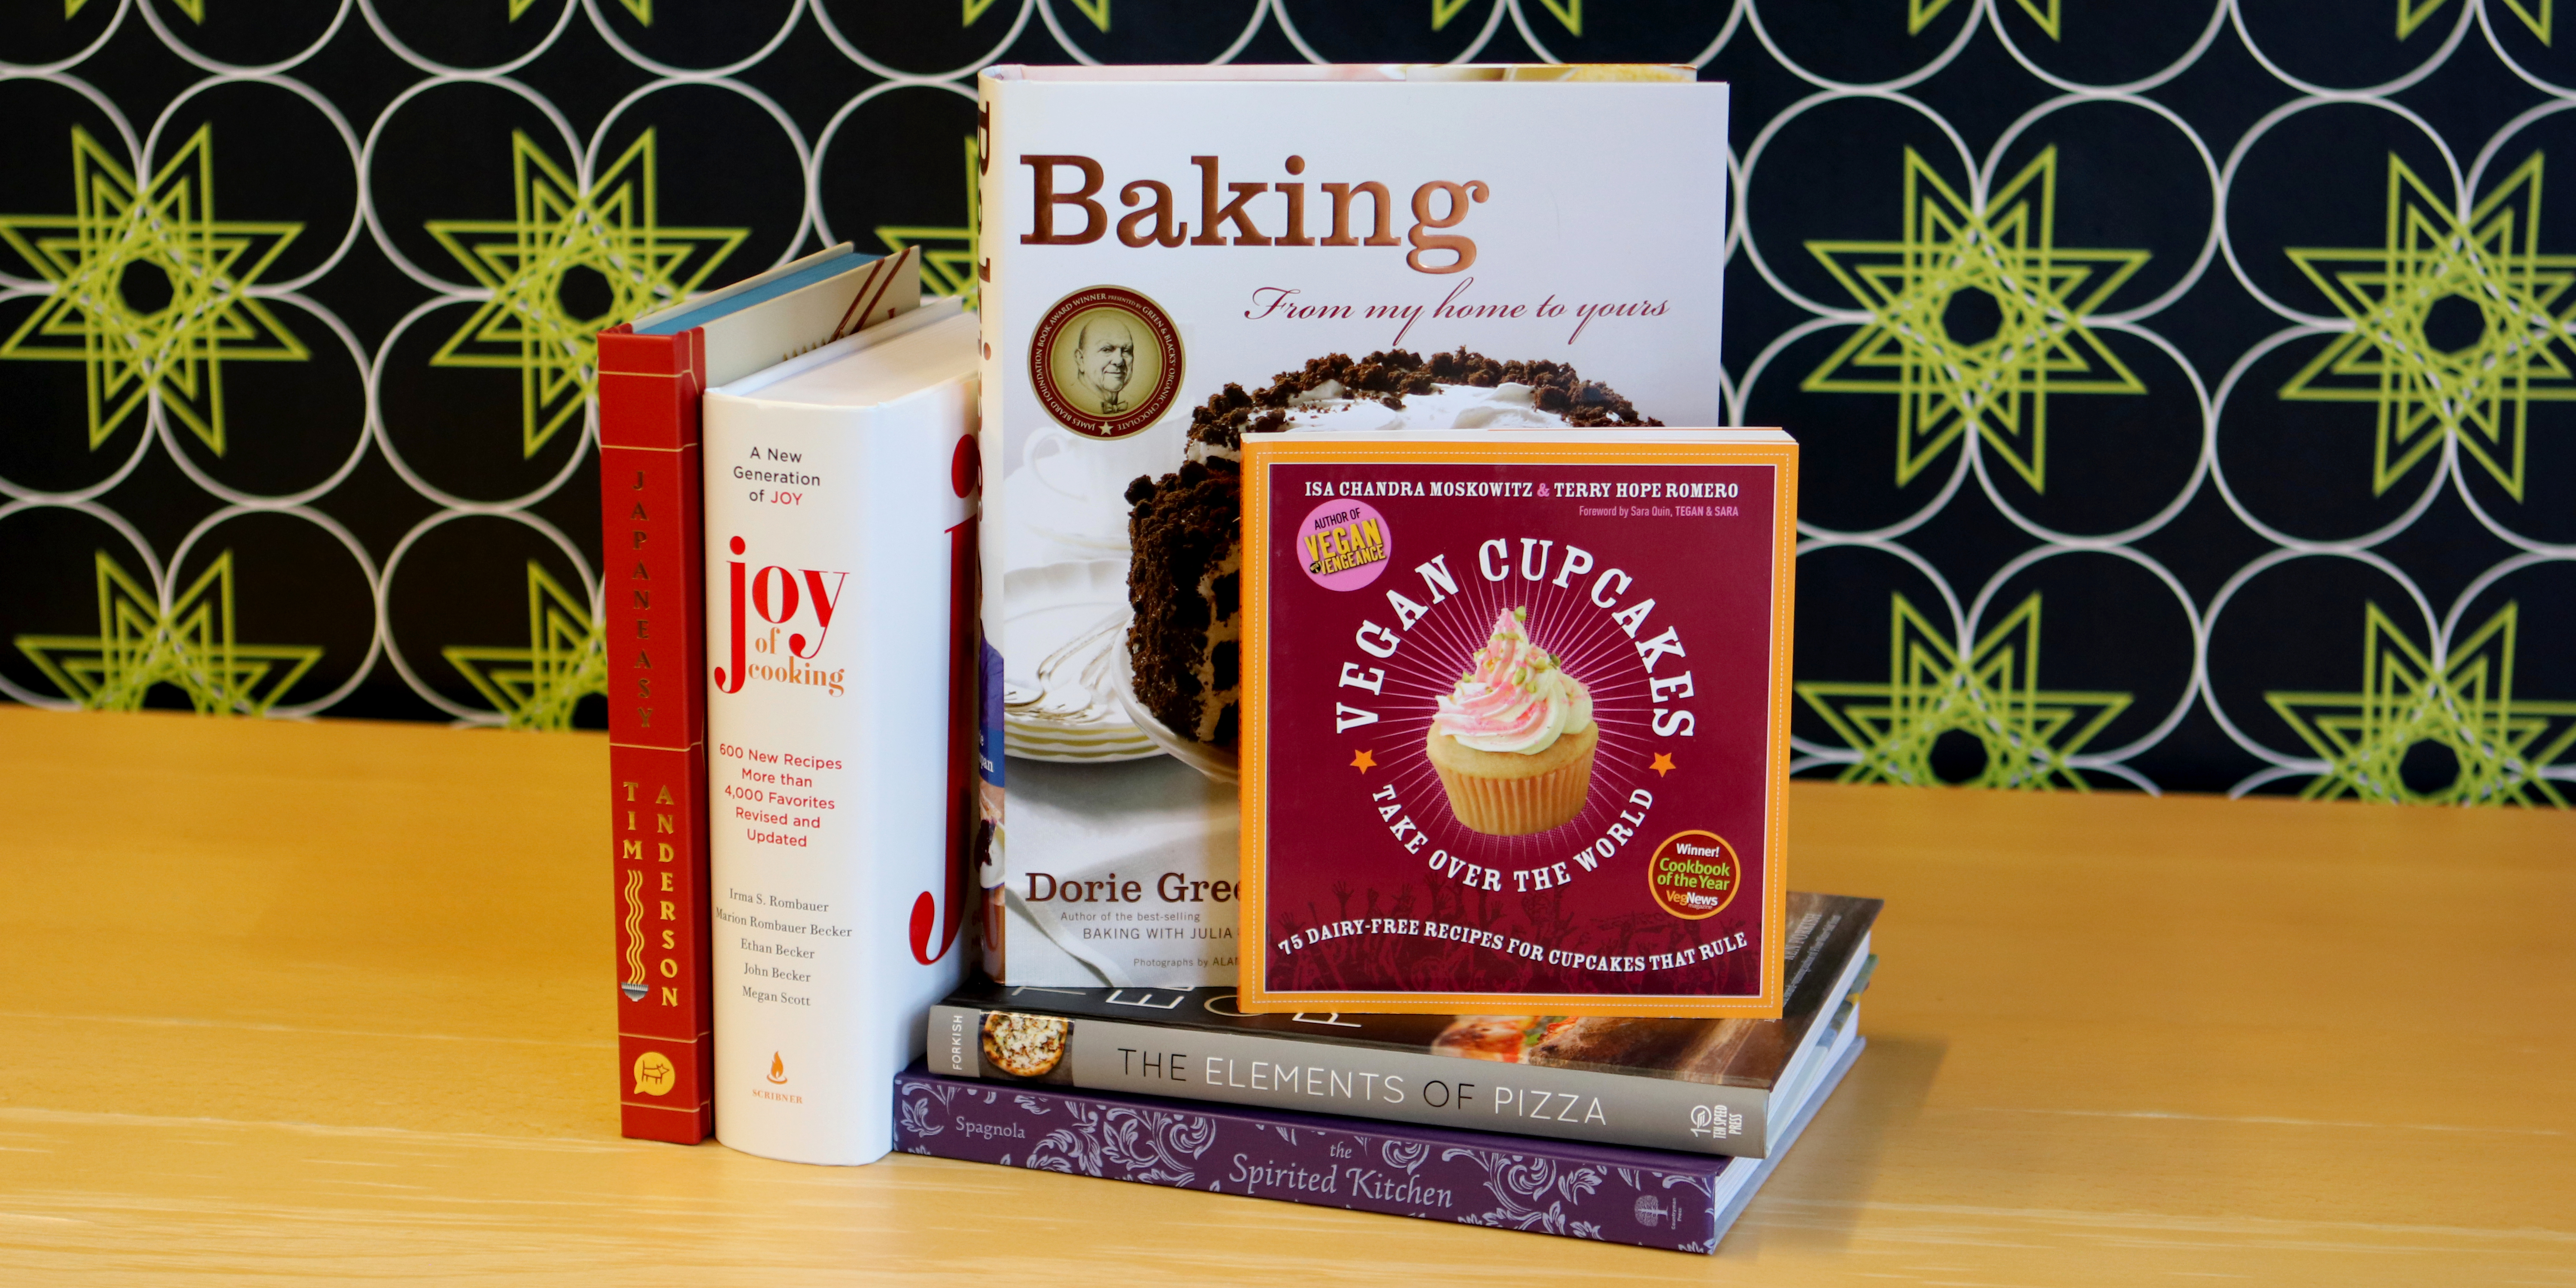 Image of 7 cookbooks